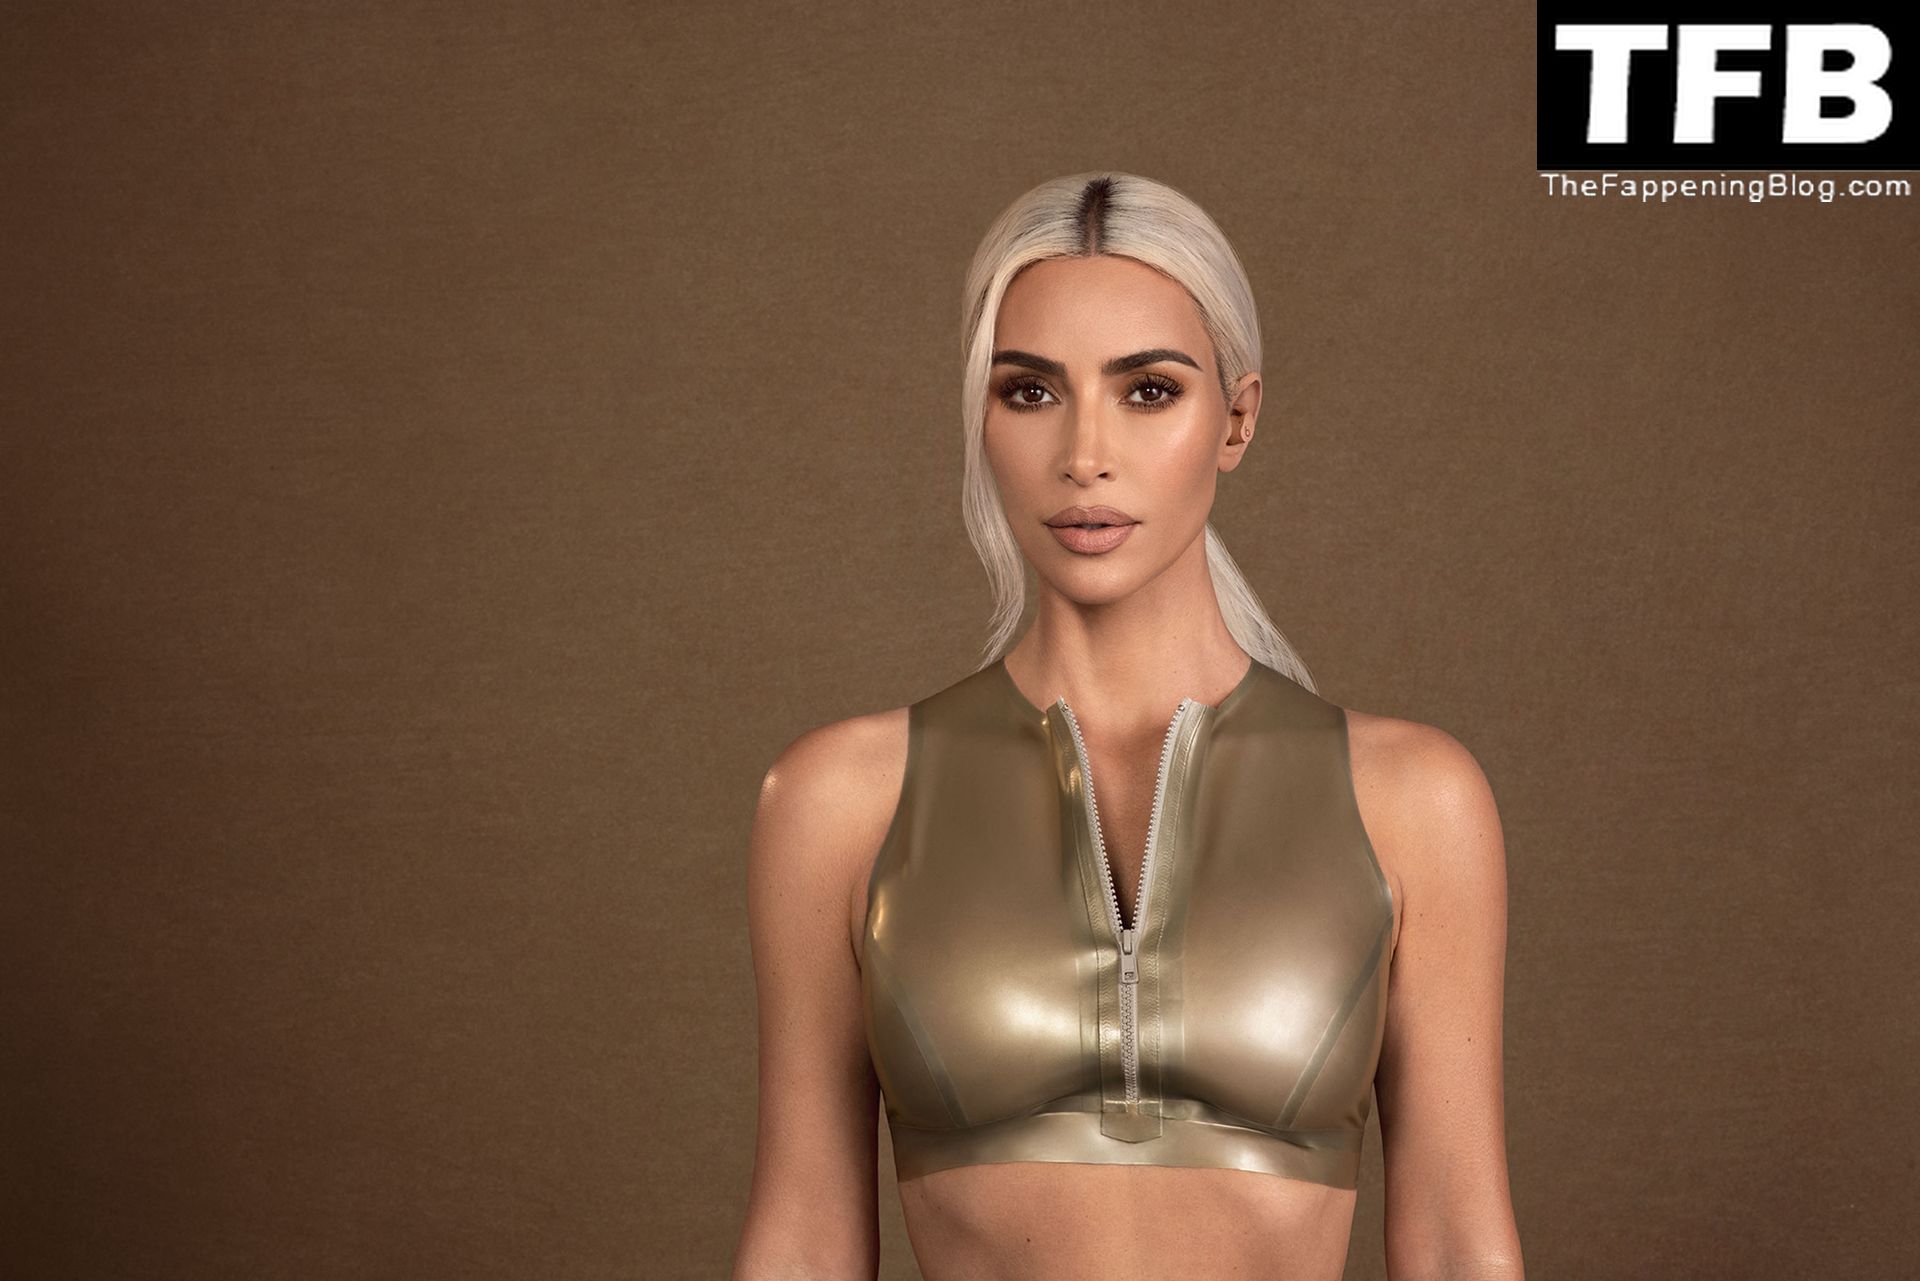 Kim Kardashian Sexy The Fappening Blog 3 - Kim Kardashian Promotes “Beats x Kim” Wireless Airbuds in a Sexy Shoot (9 Photos)